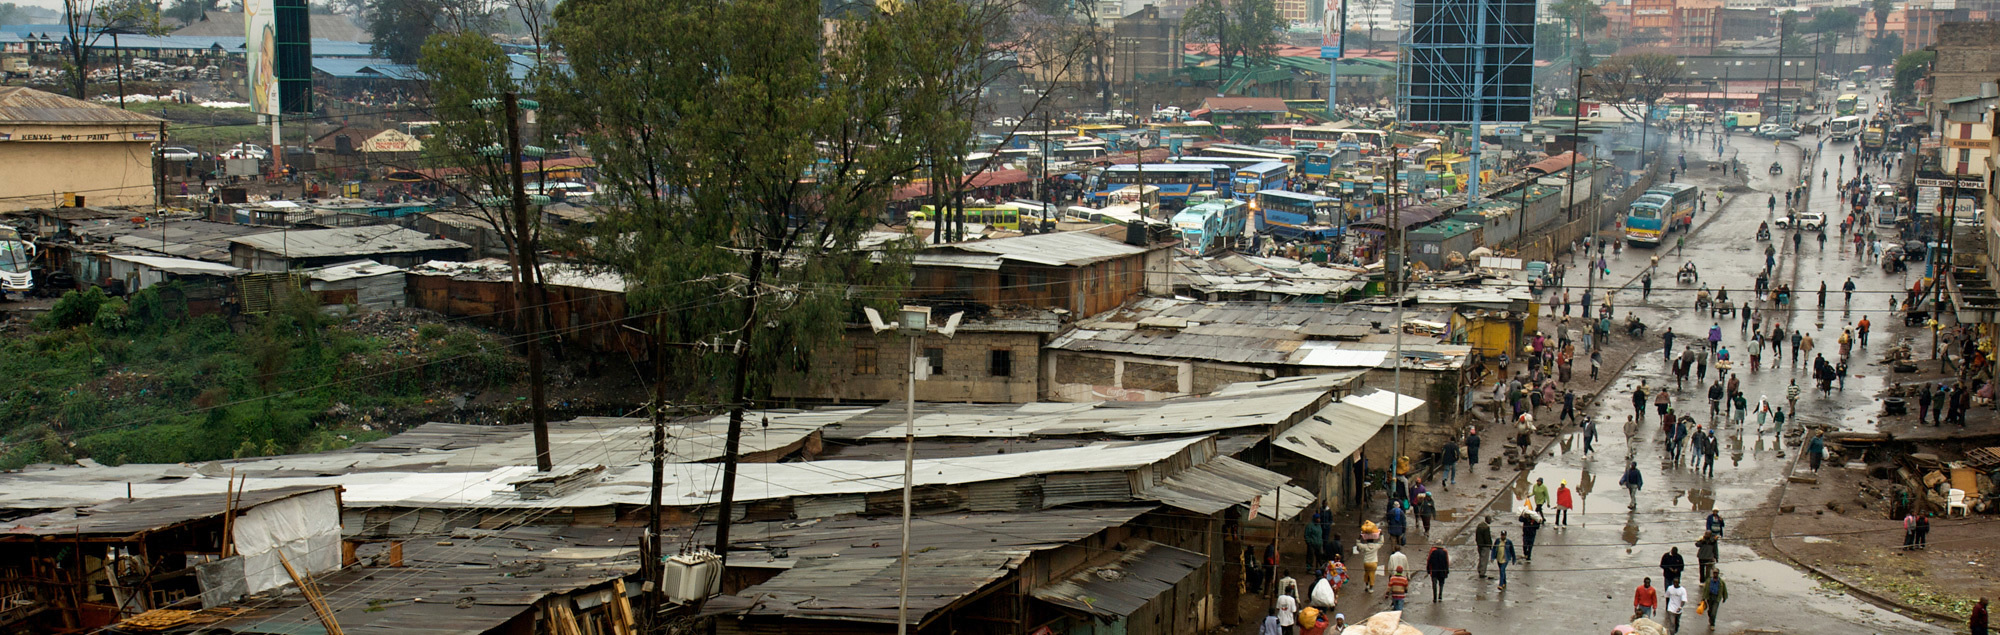 Nairobi Half Life